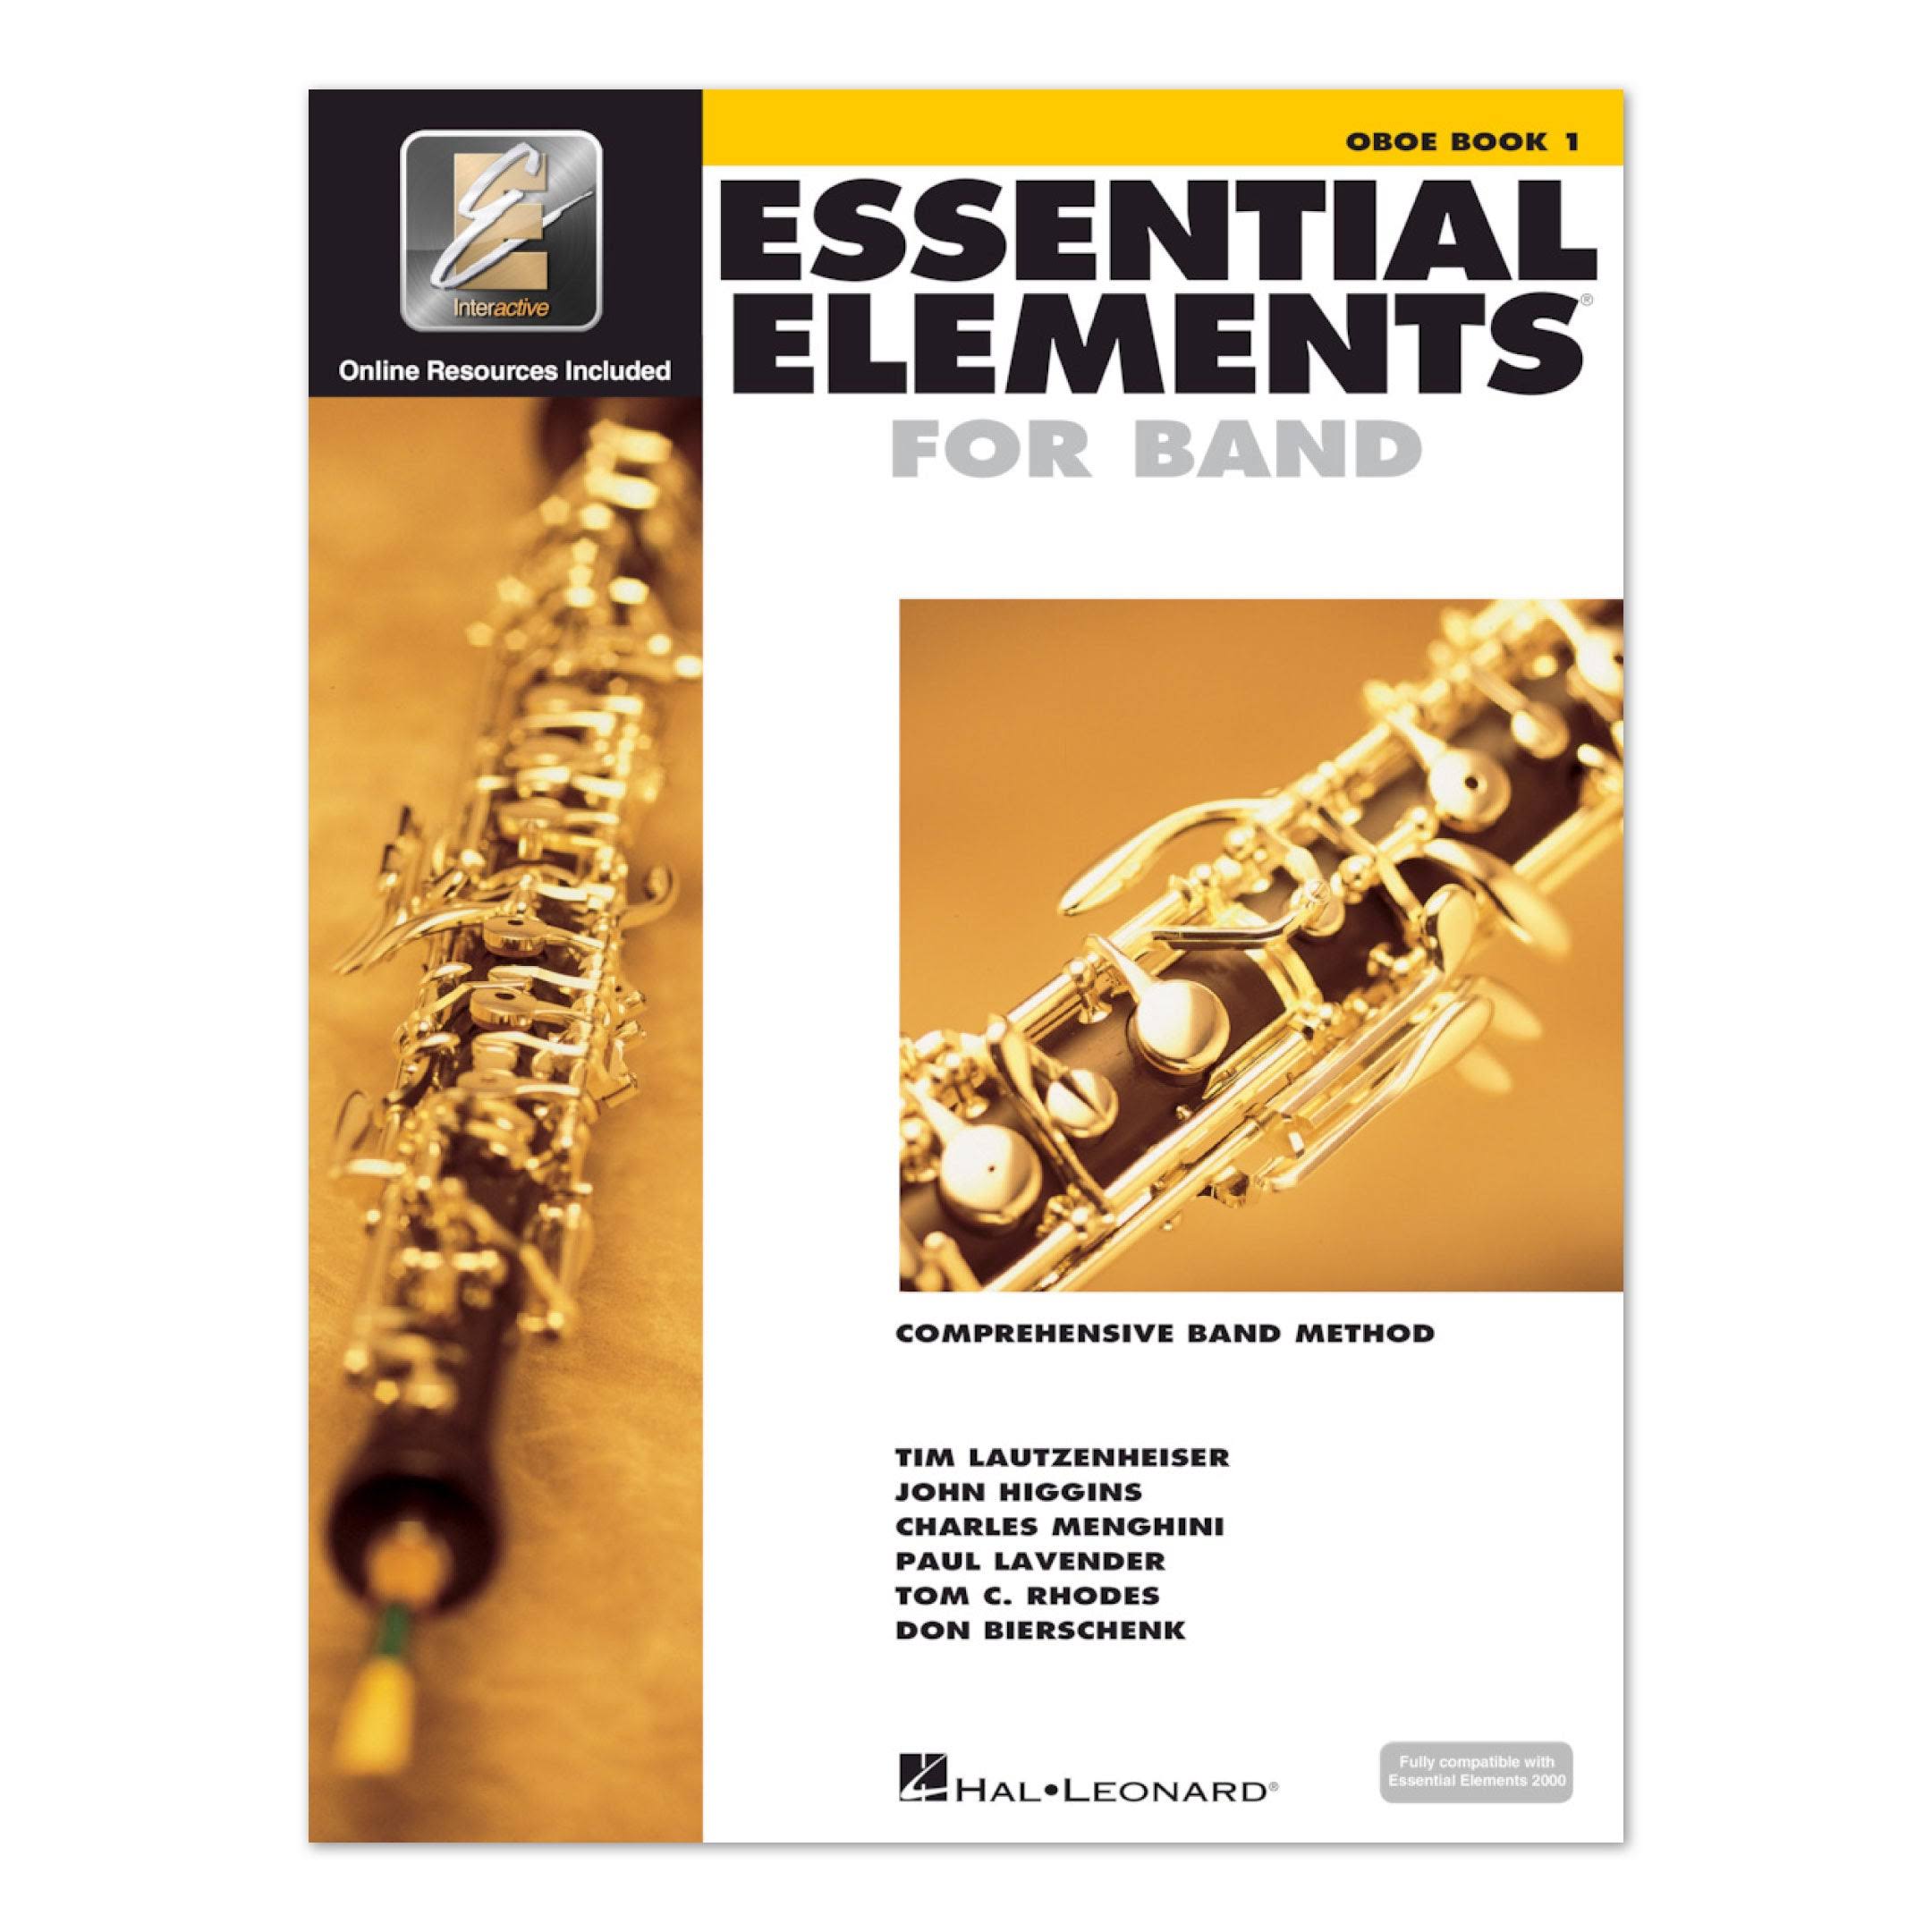 Hal Leonard Essential Elements Oboe Book 1